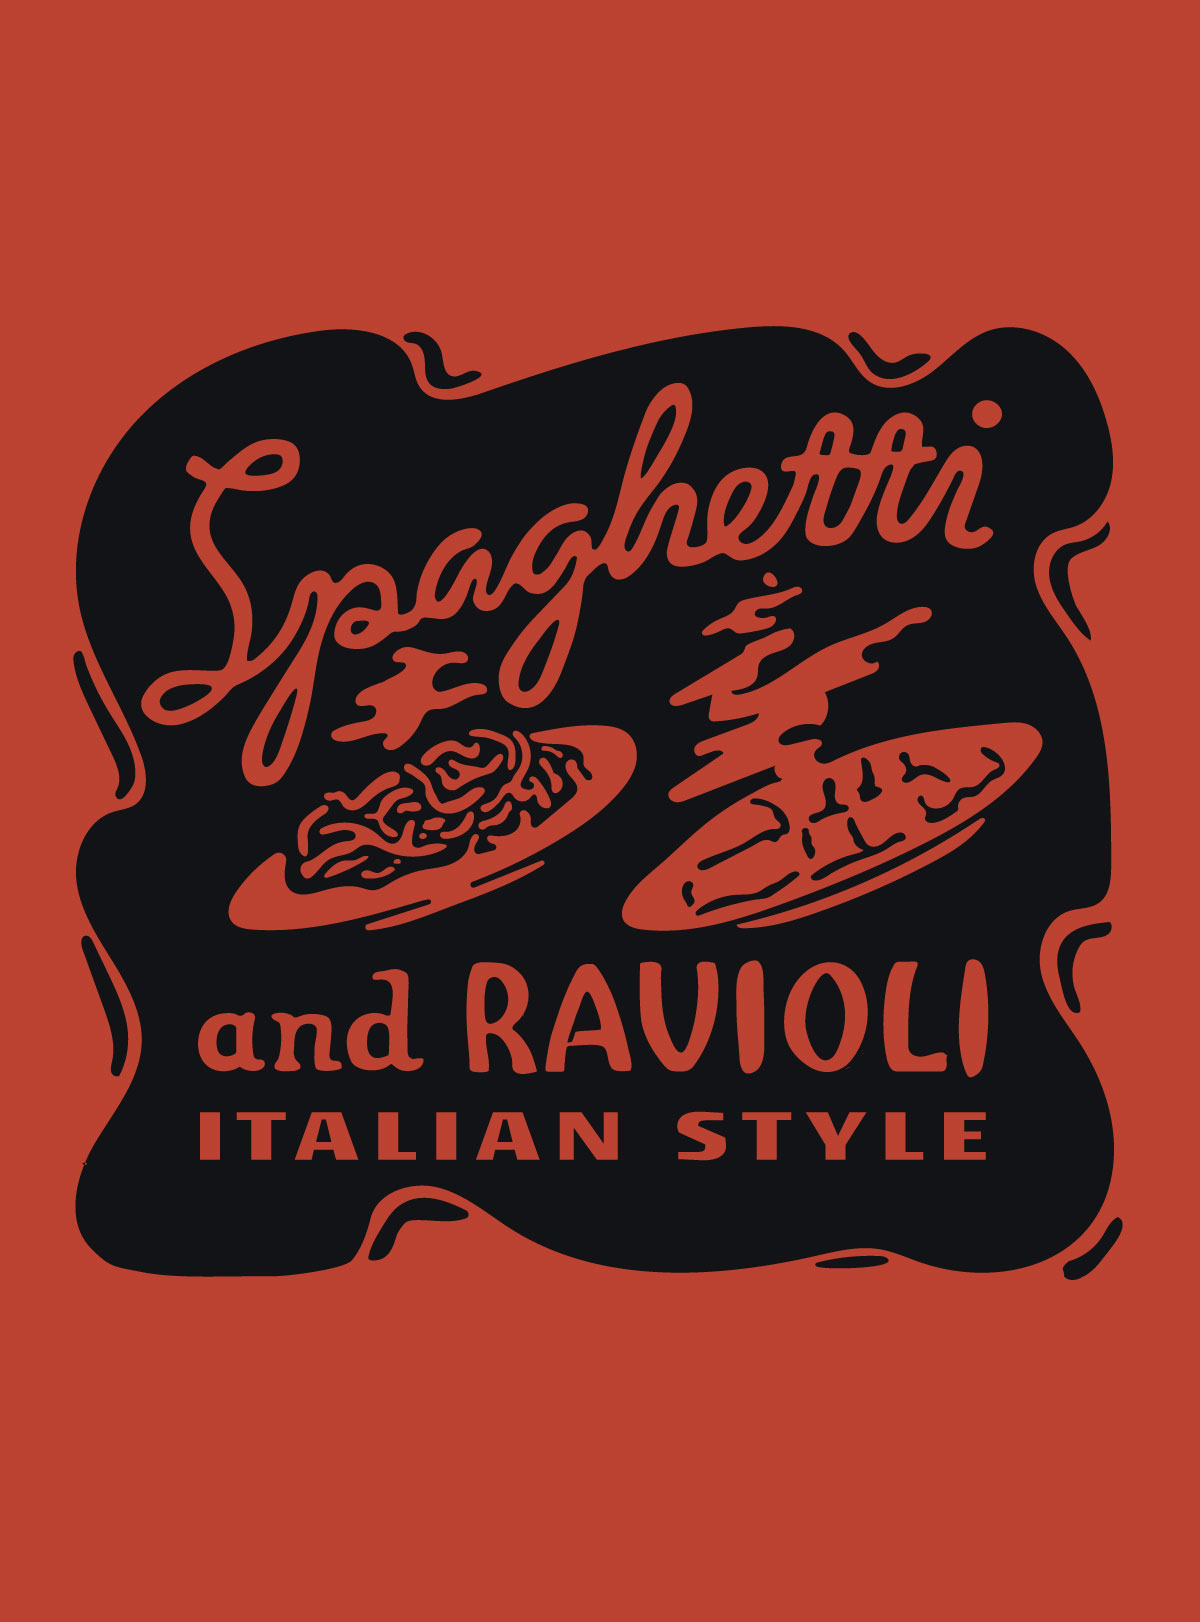 Spaghetti and Ravioli Italian Style Graphic